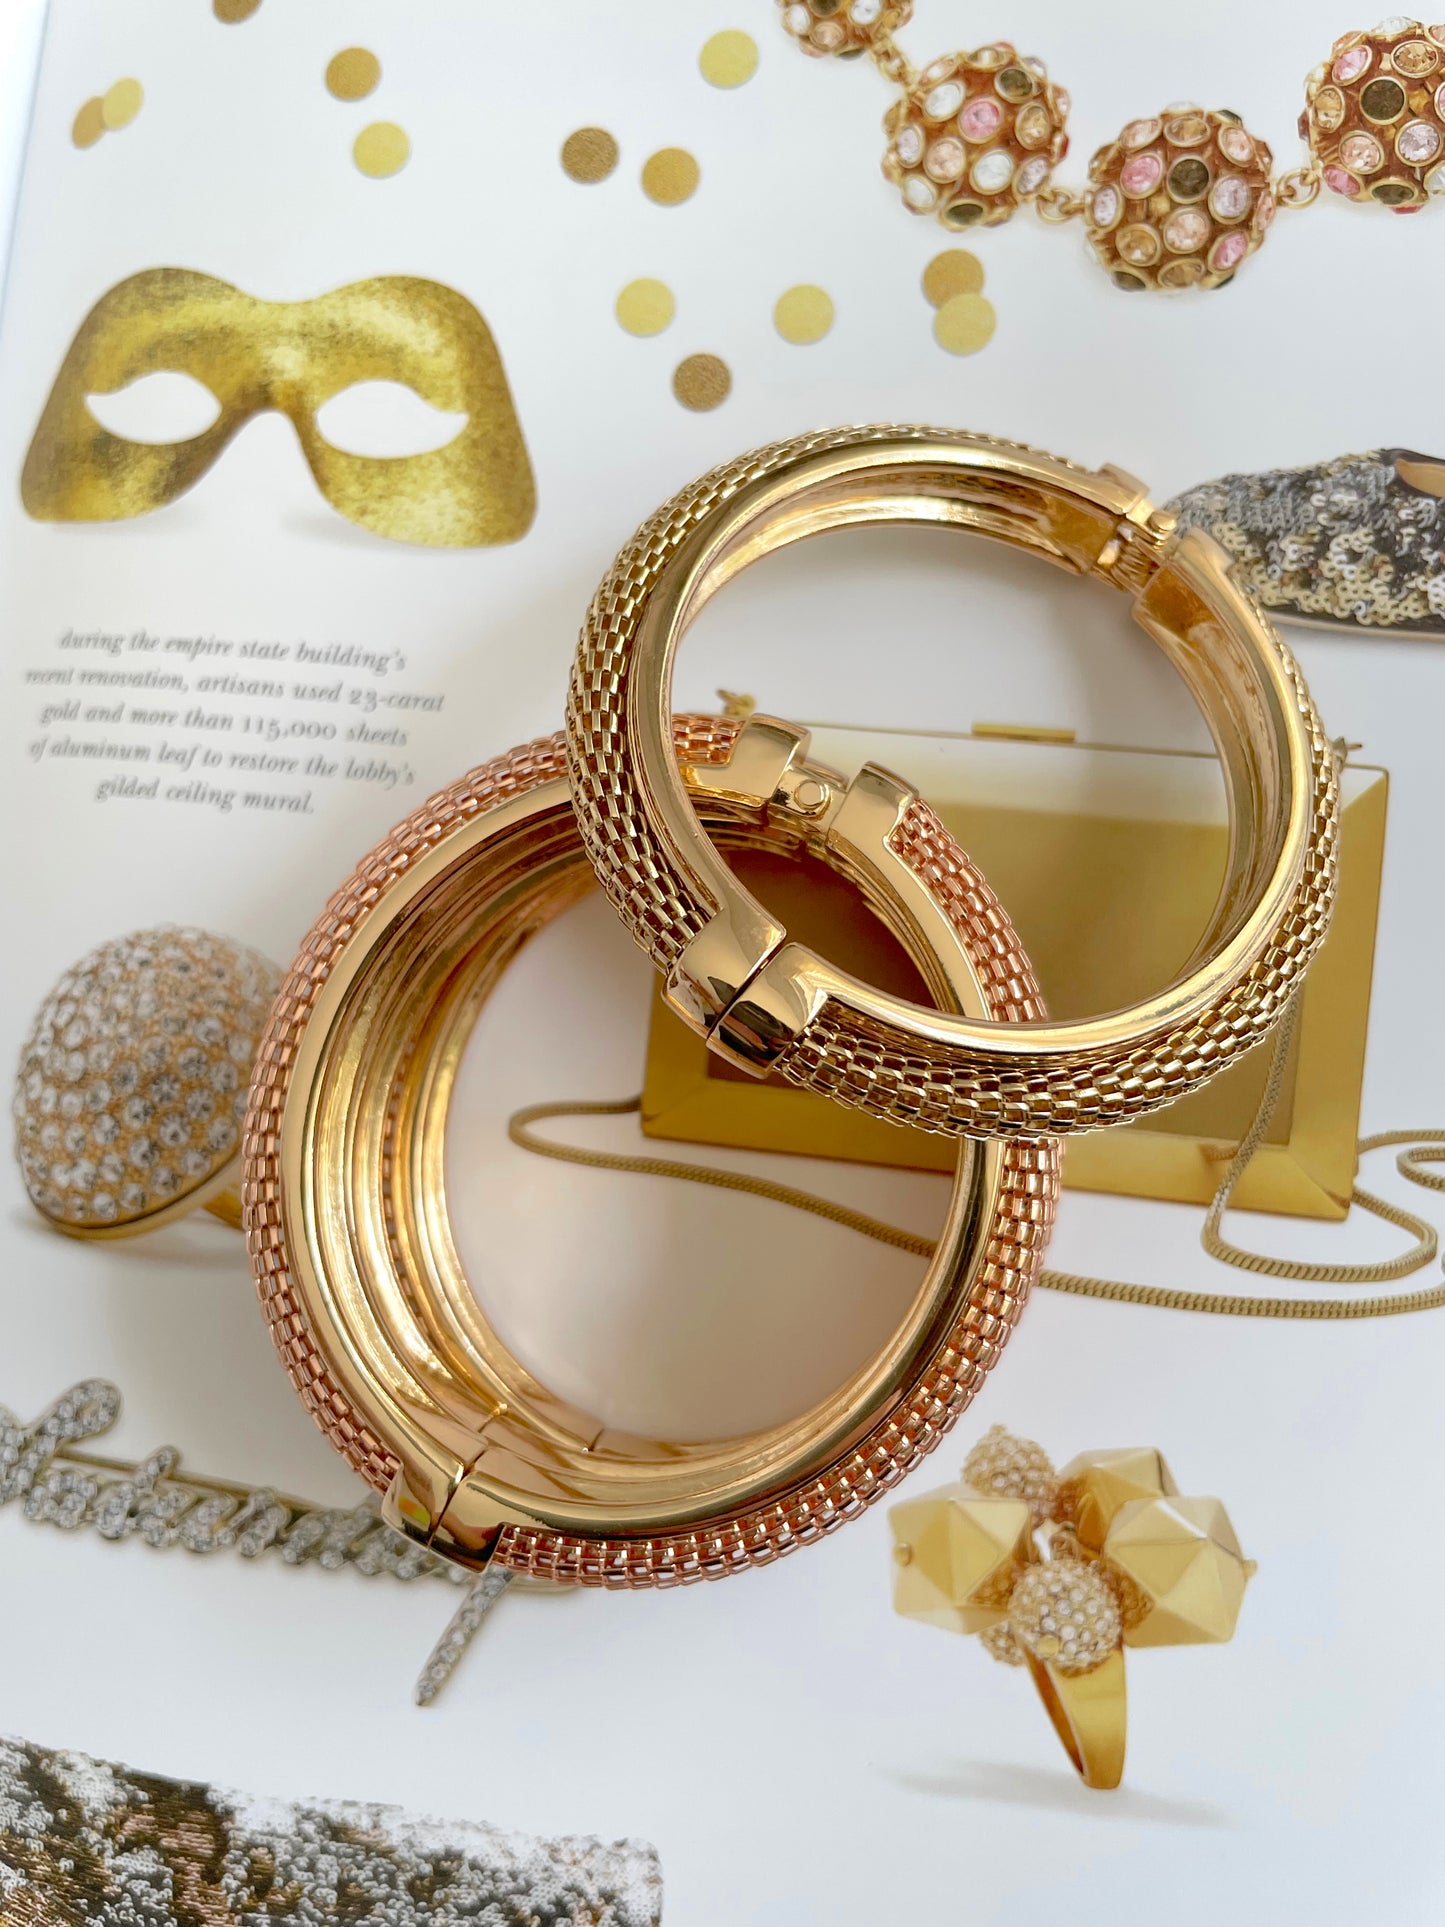 Gold plated mesh bangle bracelets